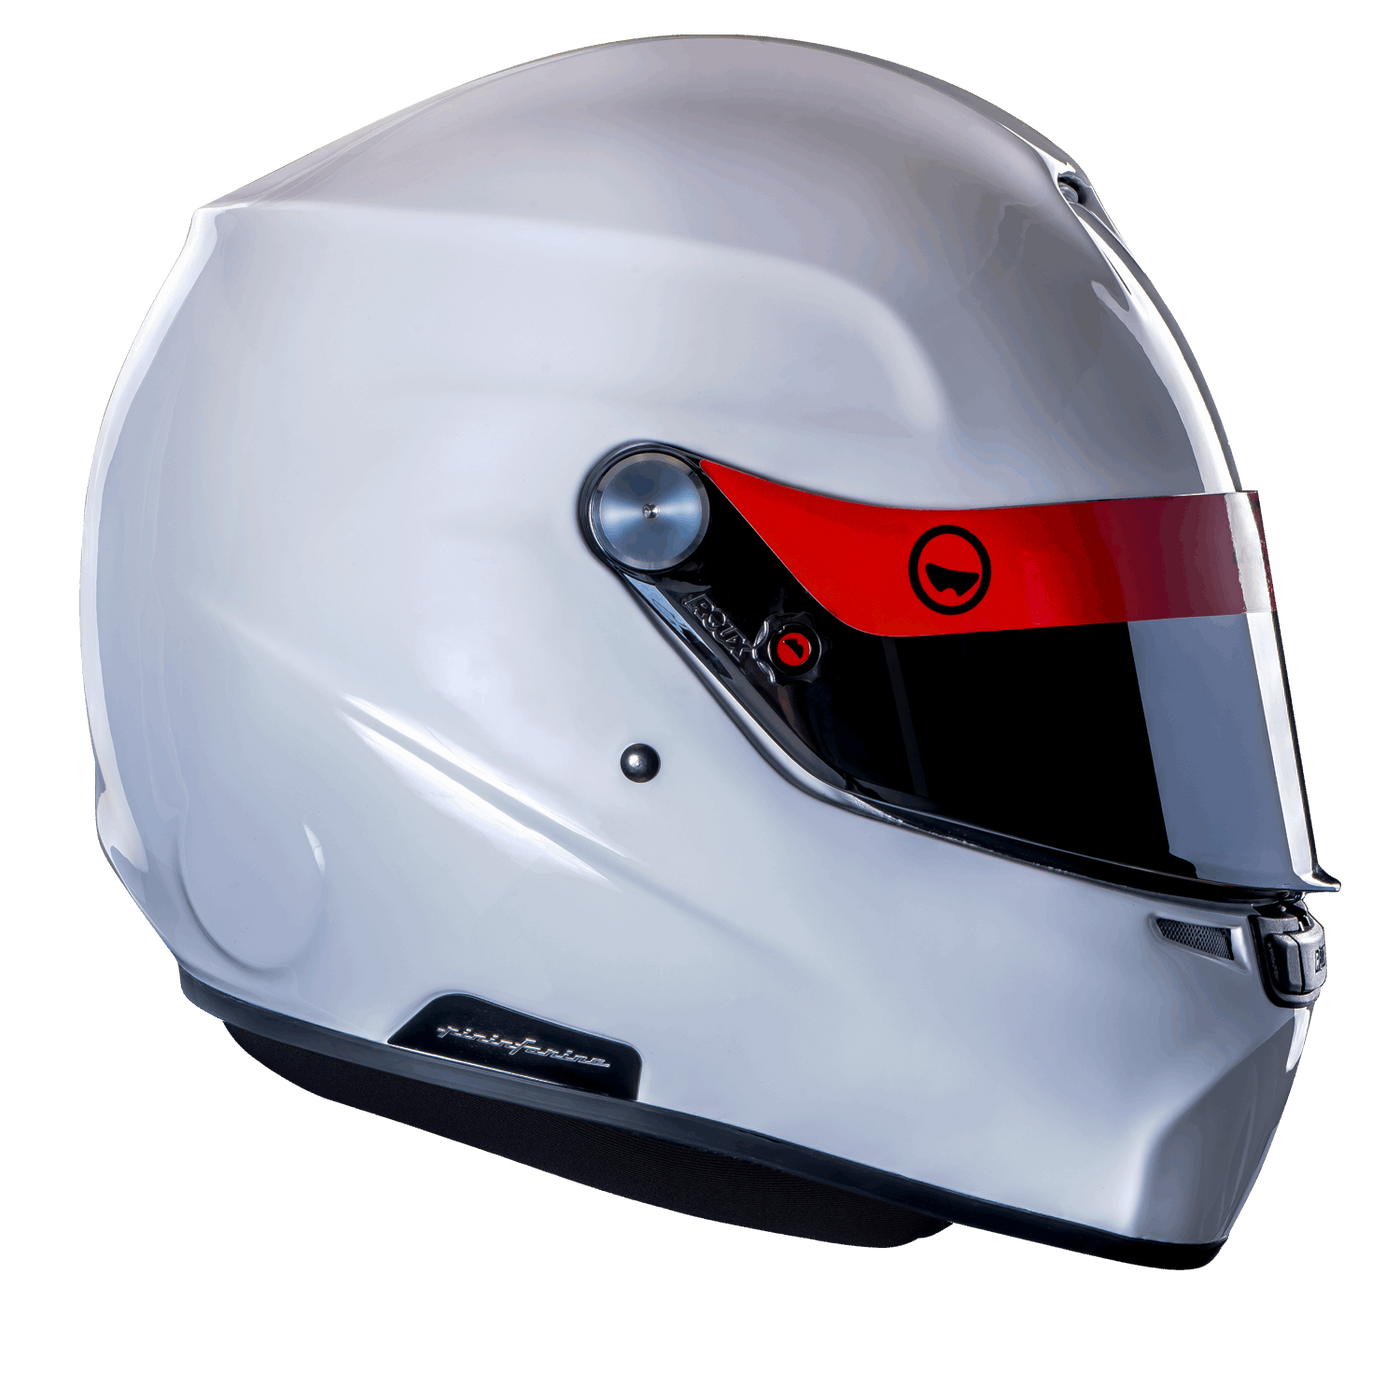 Roux by Pininfarina Karting Helmet